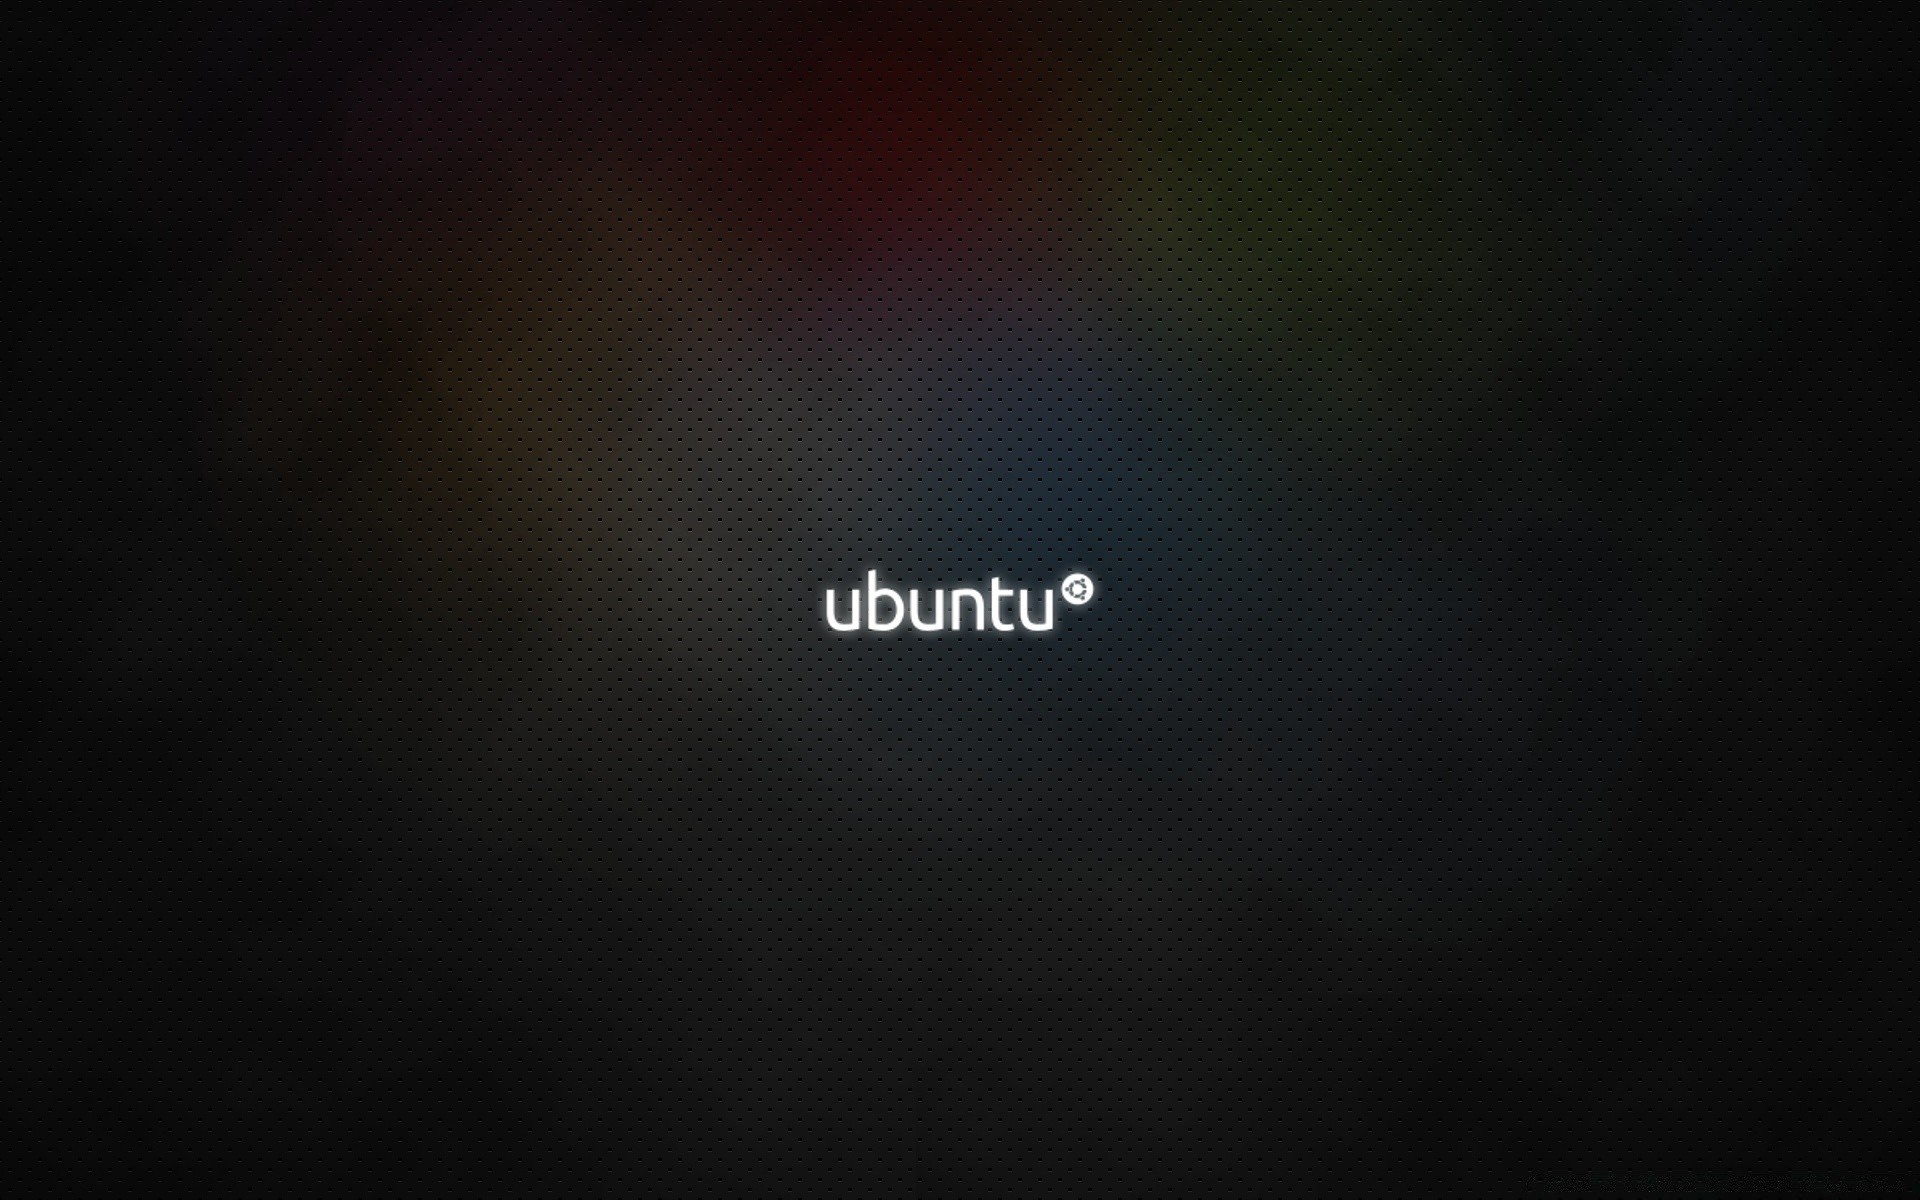 Ubuntu 1 0 Free Wallpapers